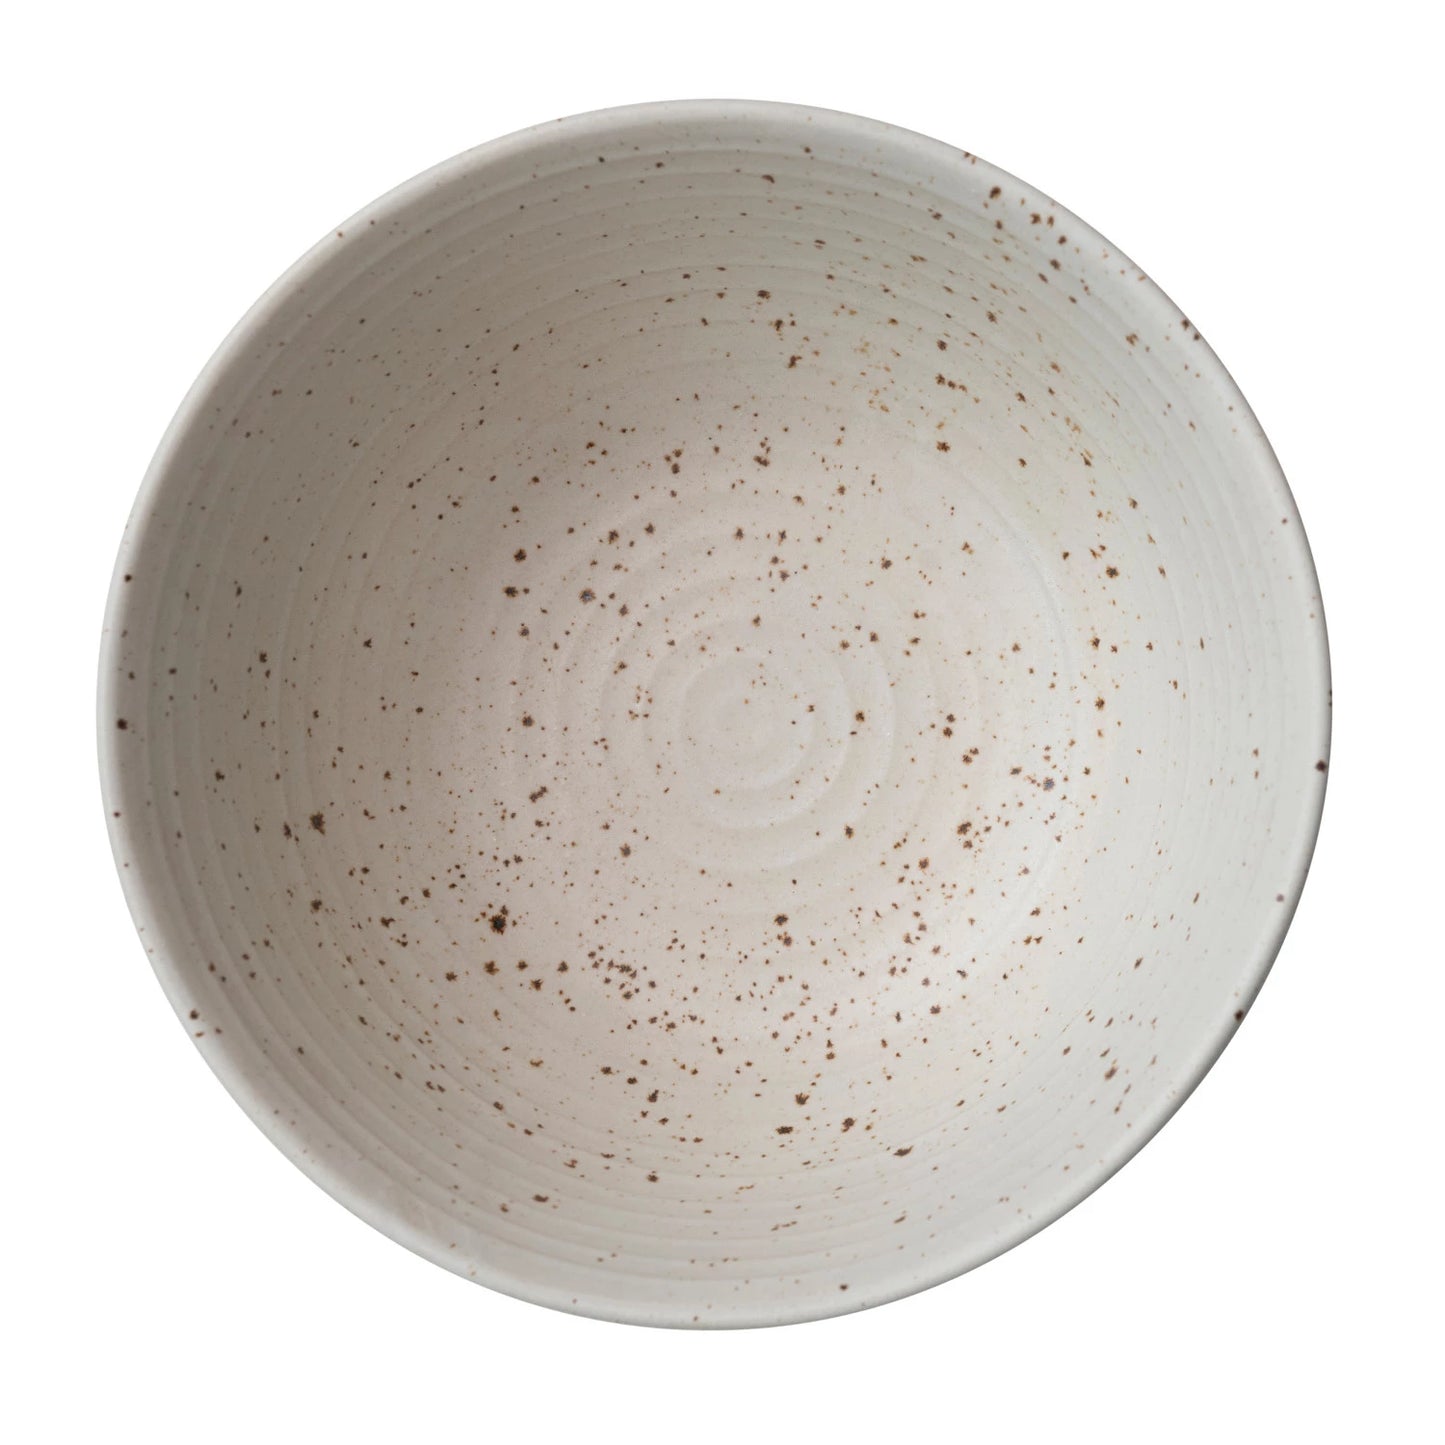 2-1/2 Quart Stoneware Bowl, Cream Color Speckled